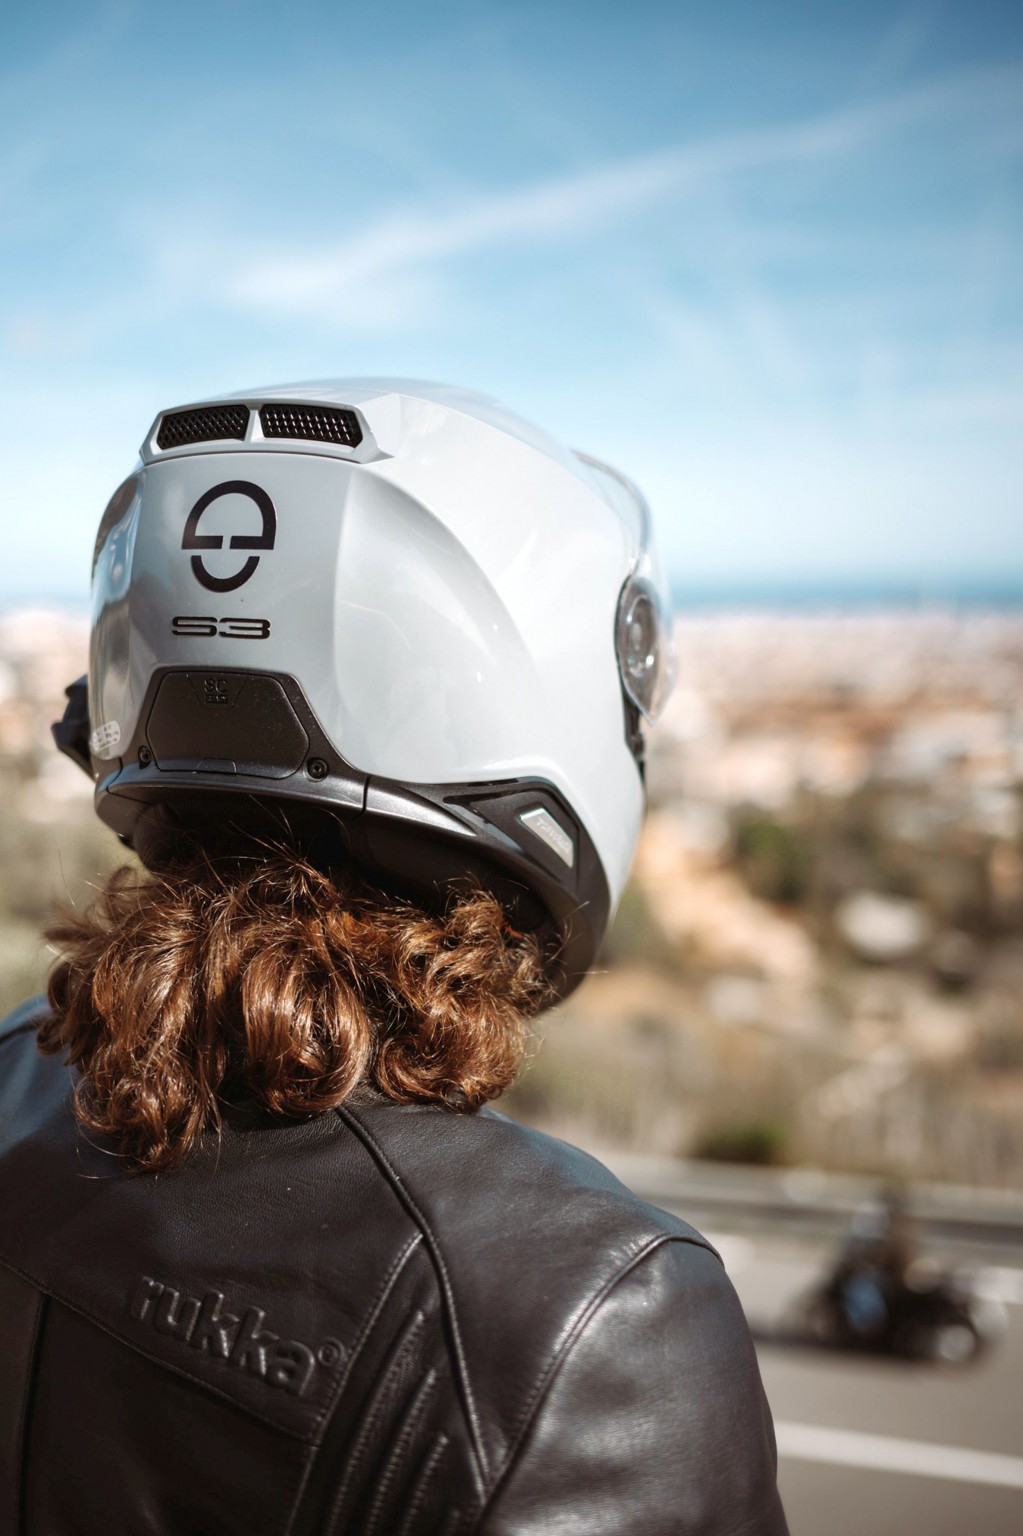 Teste do capacete de turismo desportivo Schuberth S3 - Imagem 41